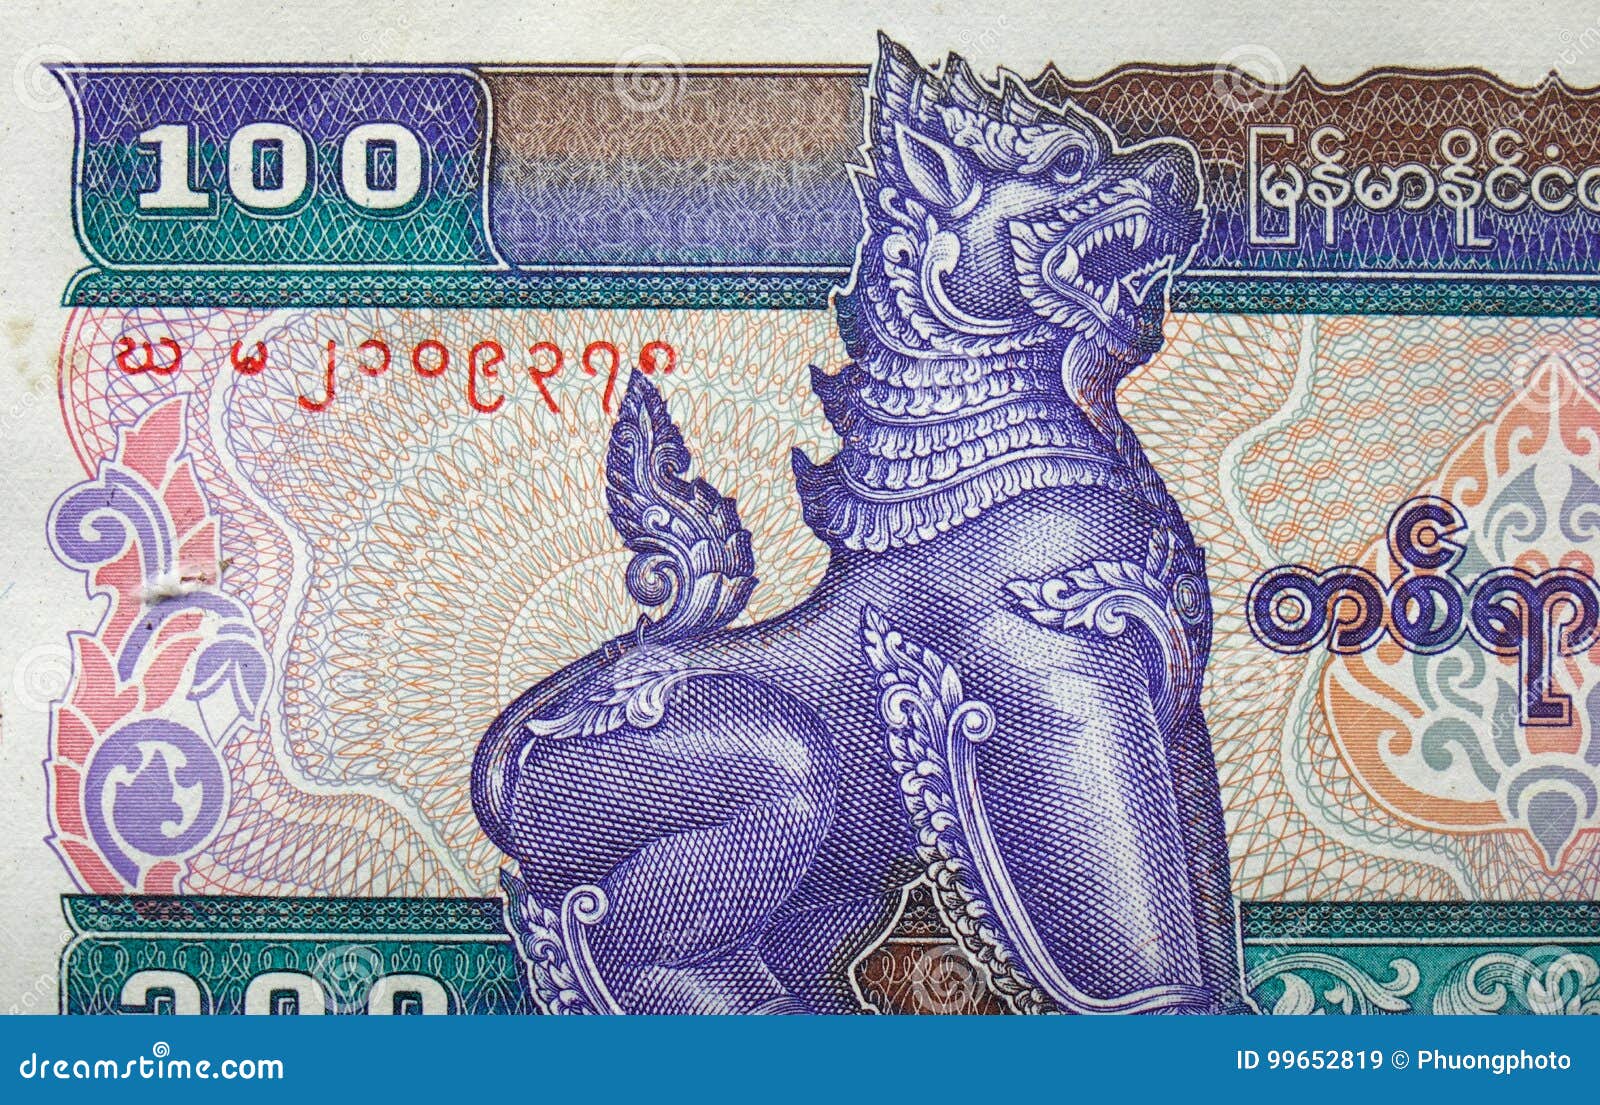 Burmese Kyat - Myanmar Money Bank Note Stock Image - Image ...